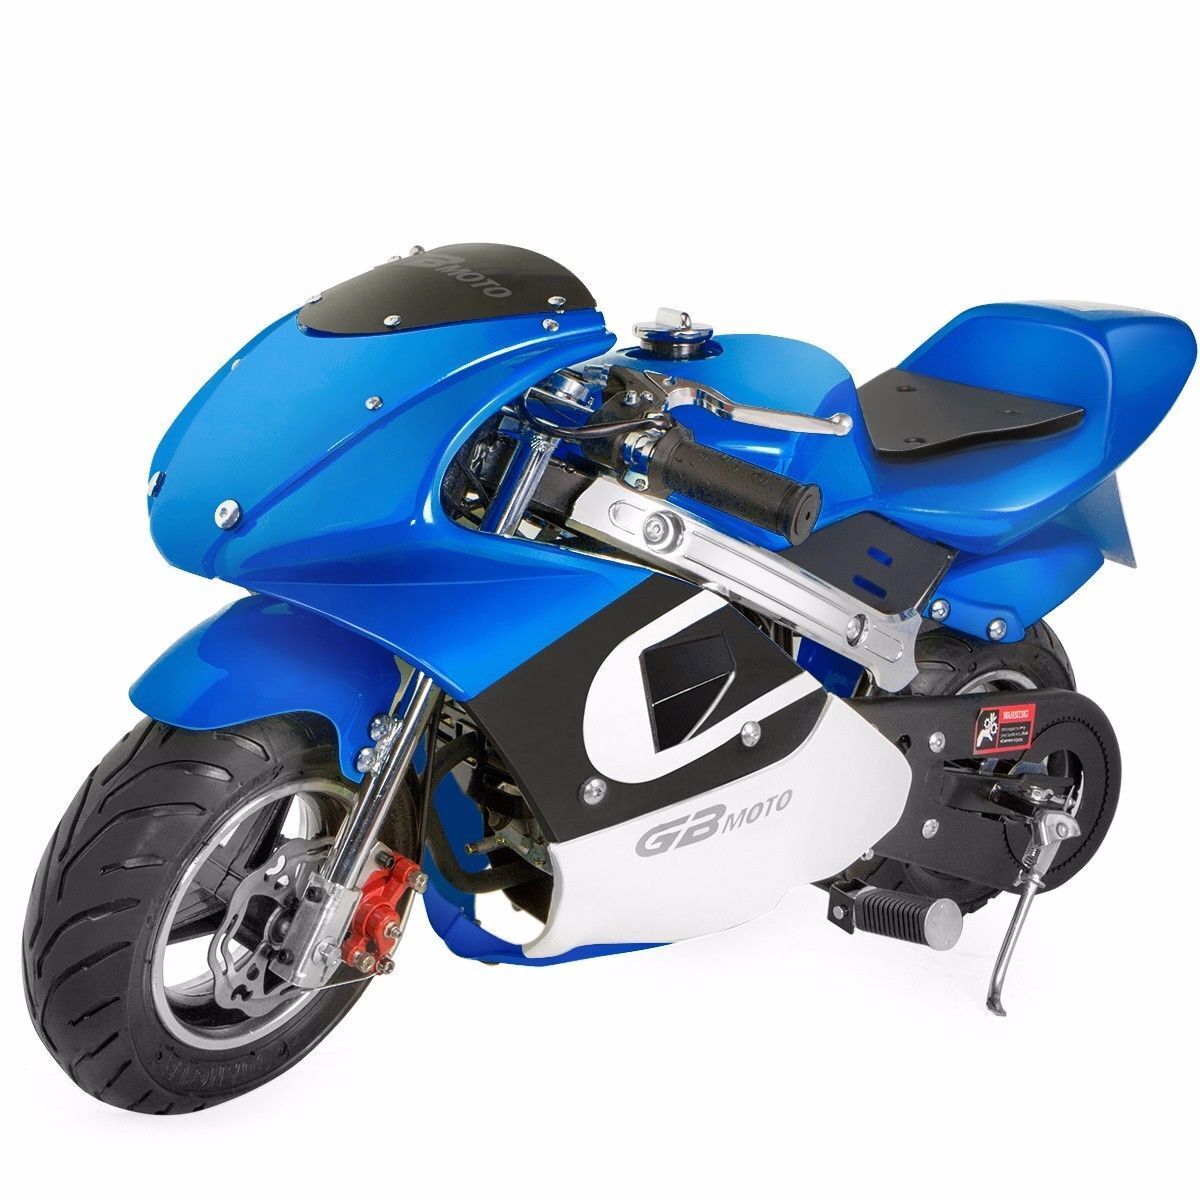 XtremepowerUS Ride On Mini Pocket Bike for Kids Motorcycle 40cc Engine, Blue